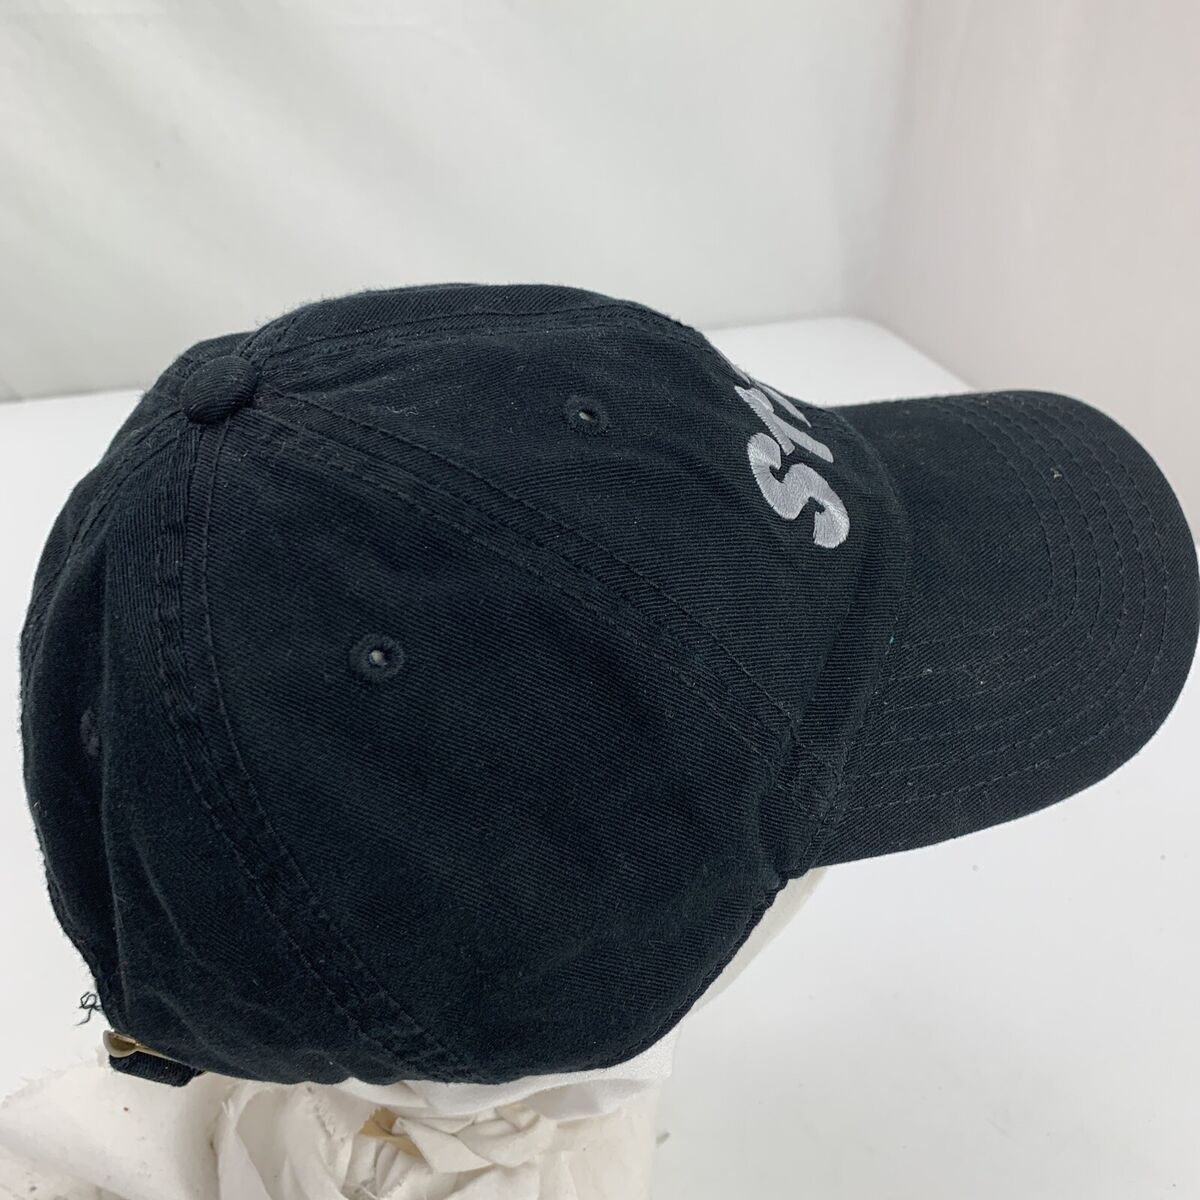 S Up Arrow 2C Ball Cap Hat Adjustable Baseball | eBay